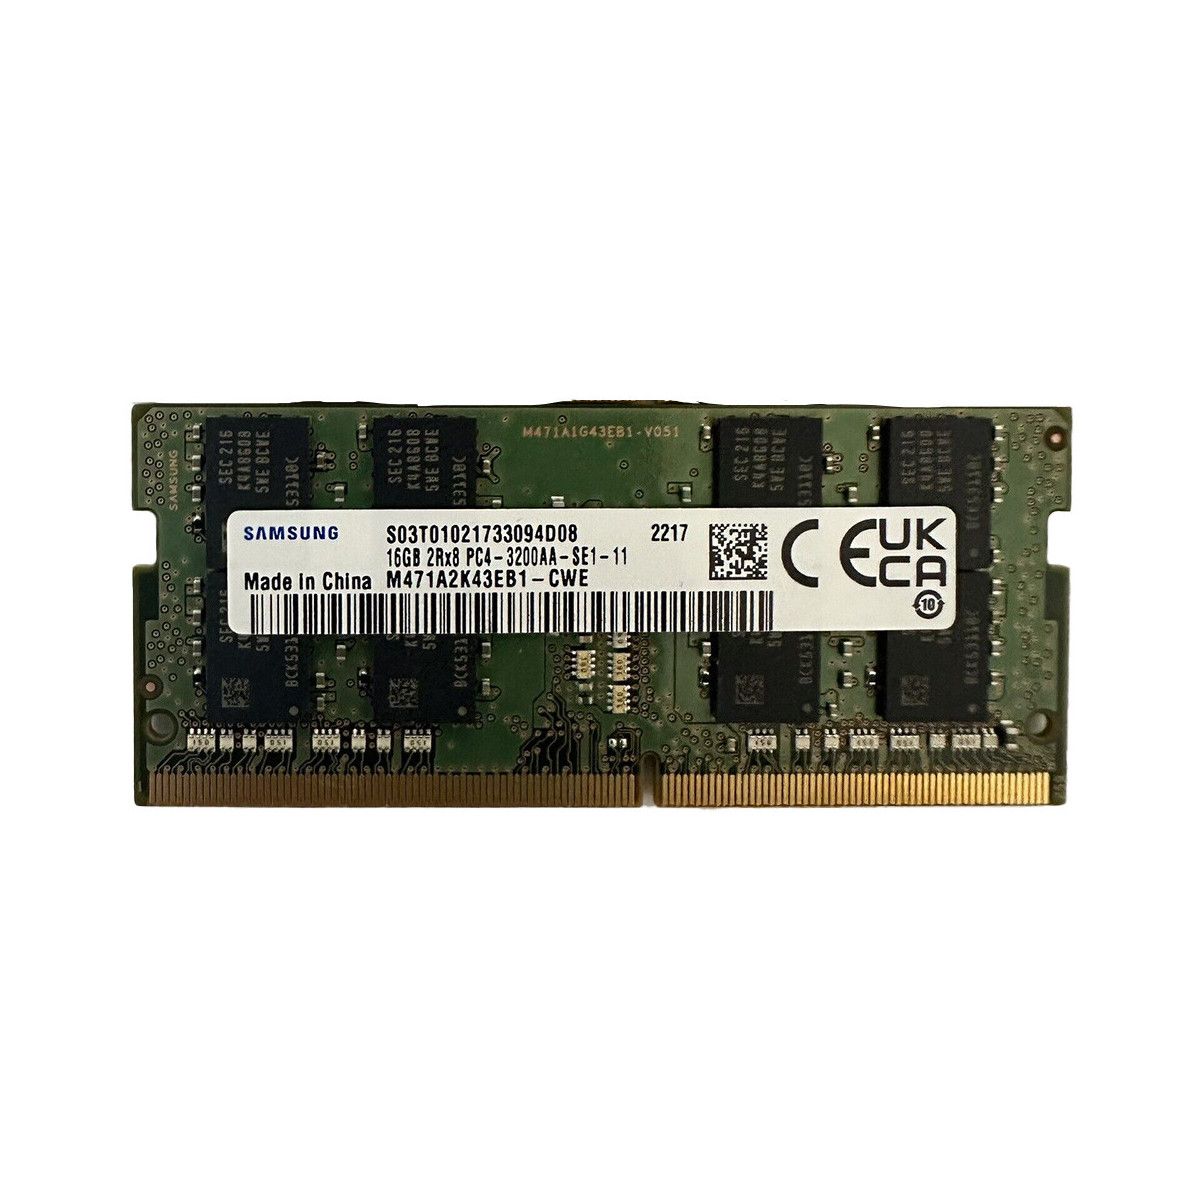 Samsung SODIMM 16GB 2Rx8 PC-3200 Mhz